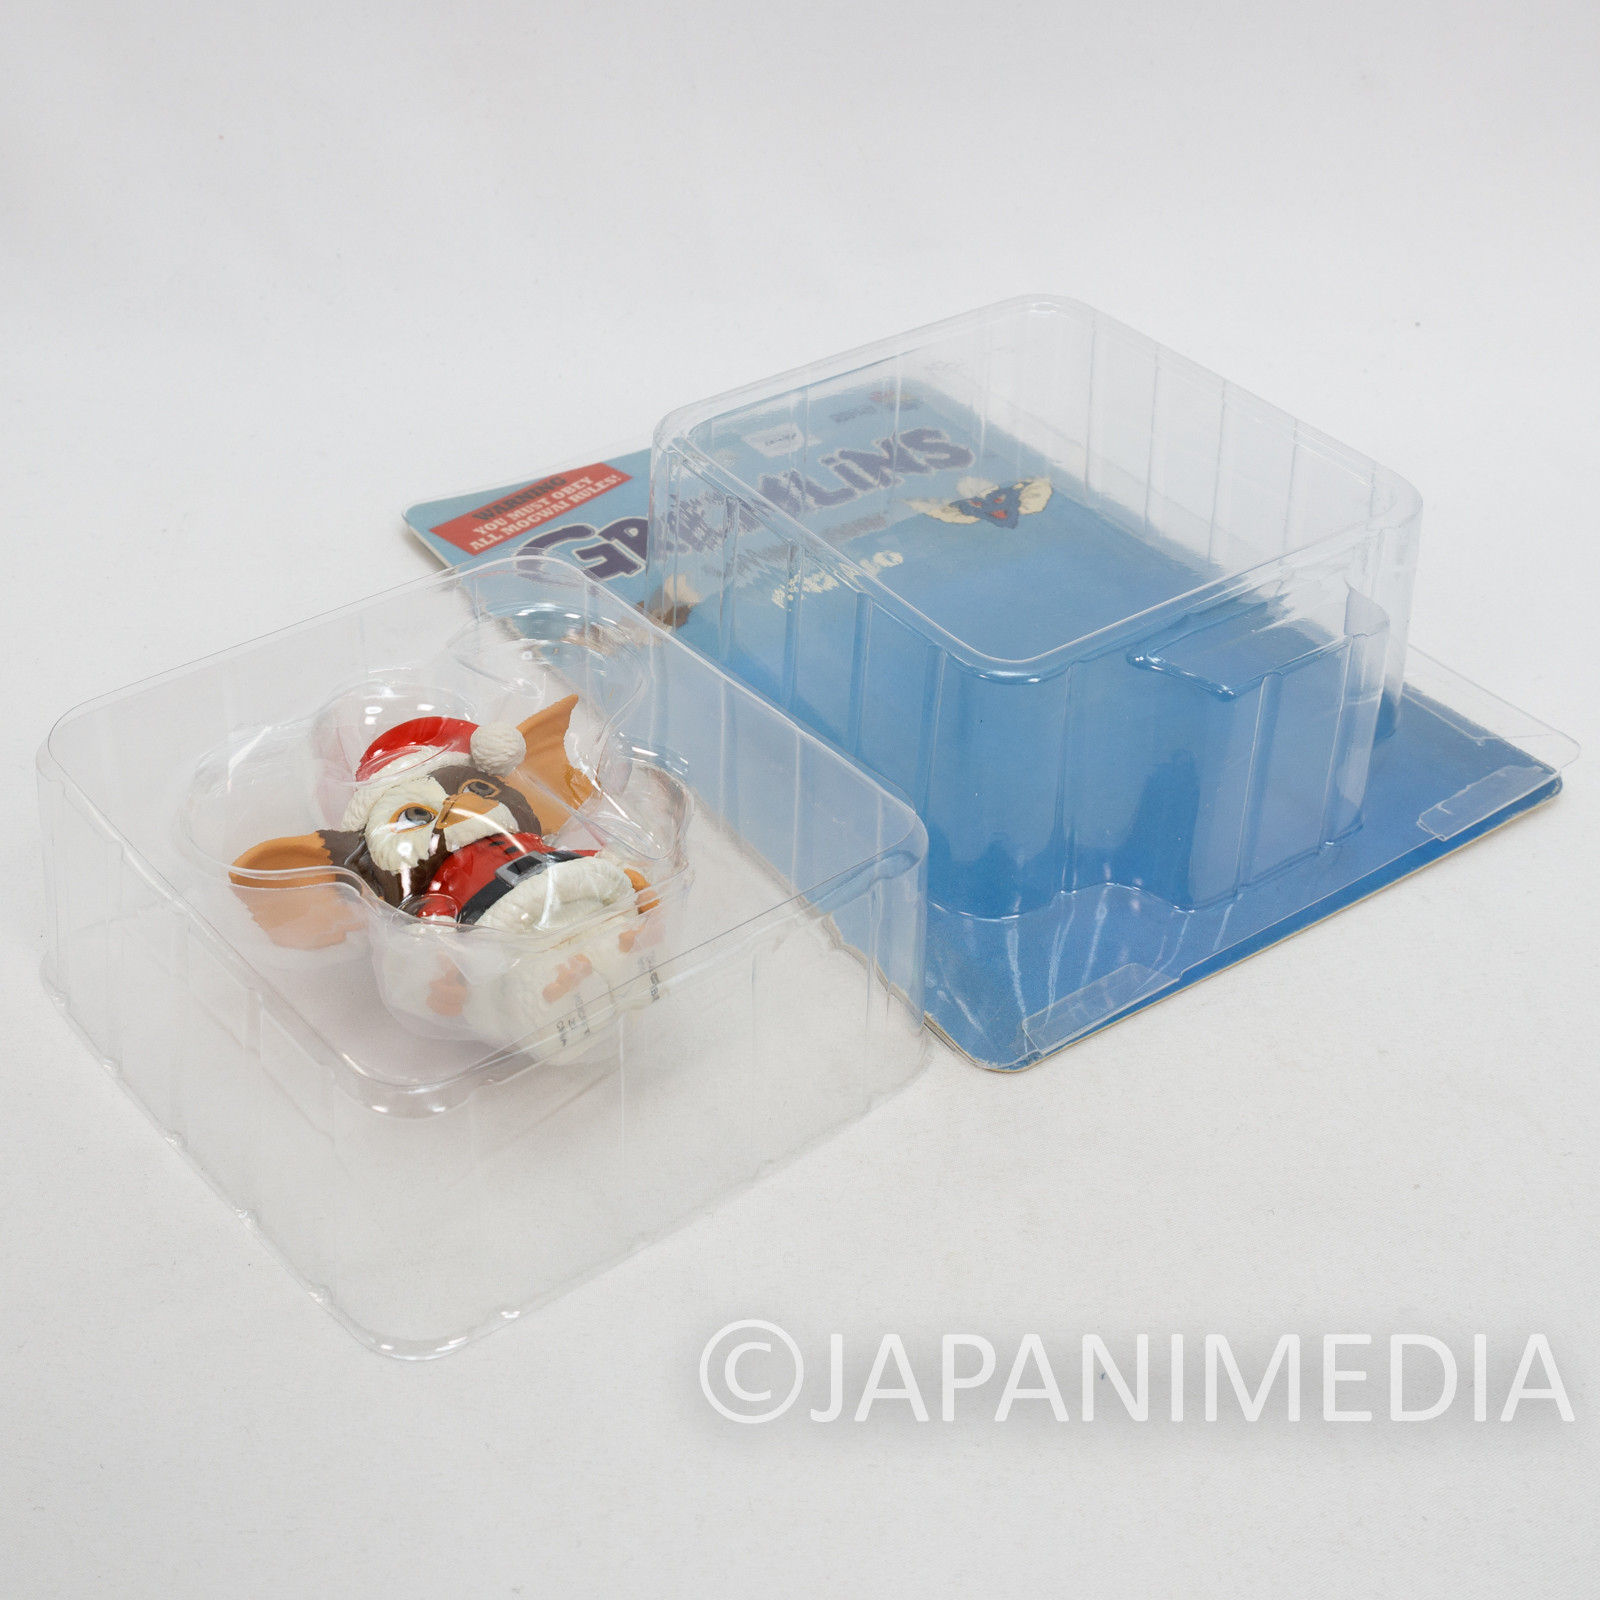 Gremlins GIZMO Santa ver. Ultra Detail Small Figure Medicom Toy JAPAN MOVIE